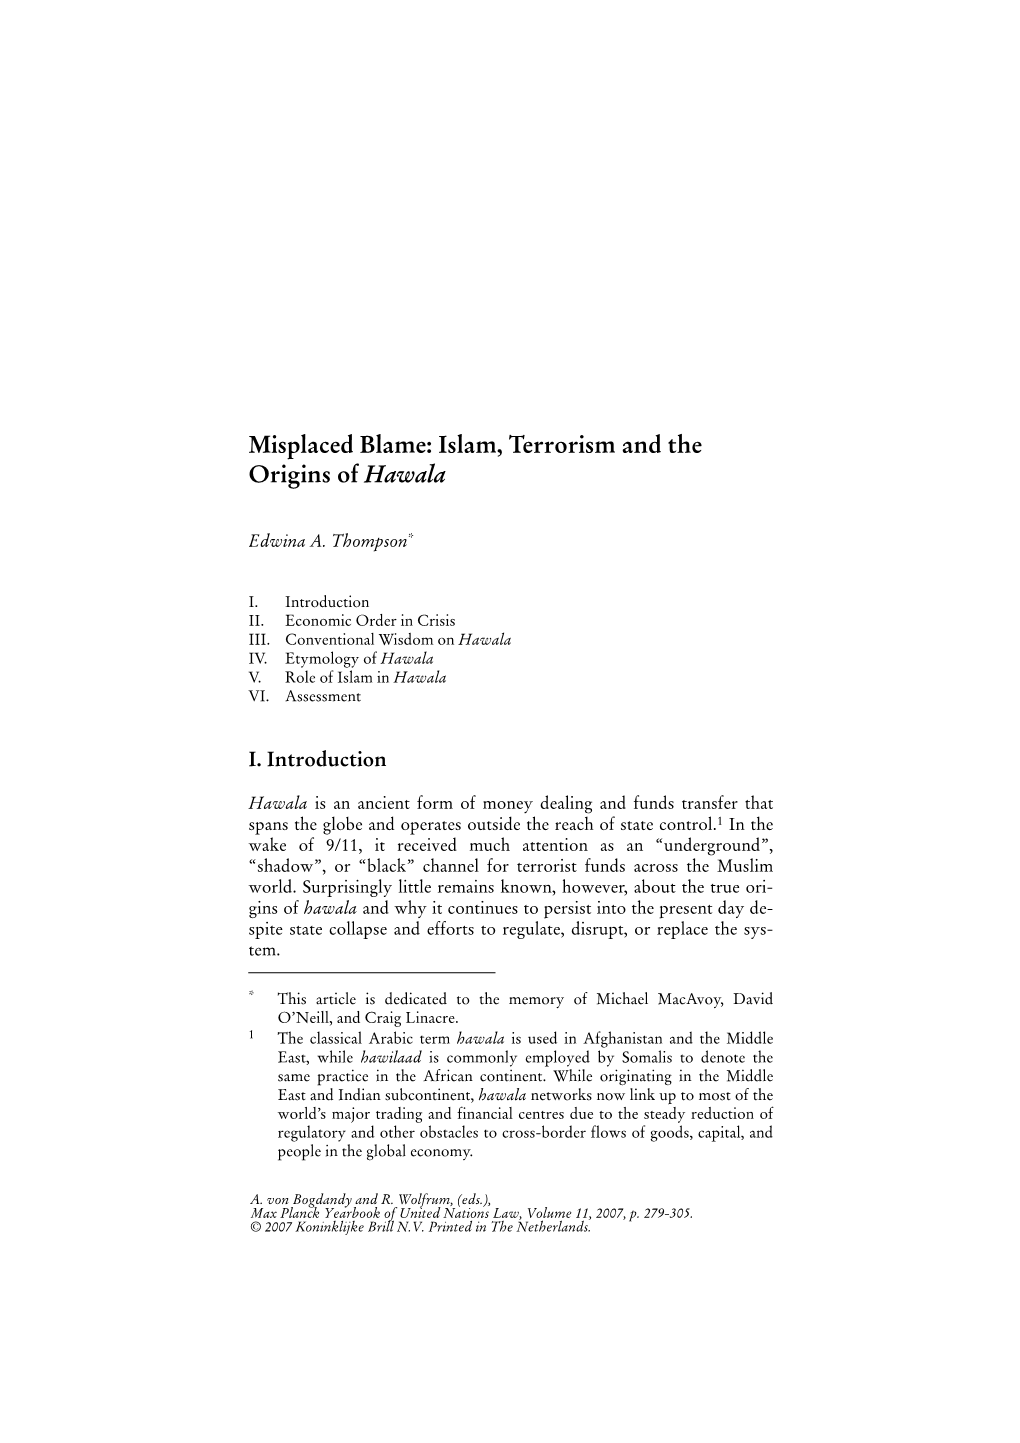 Misplaced Blame: Islam, Terrorism and the Origins of Hawala (PDF, 155.6